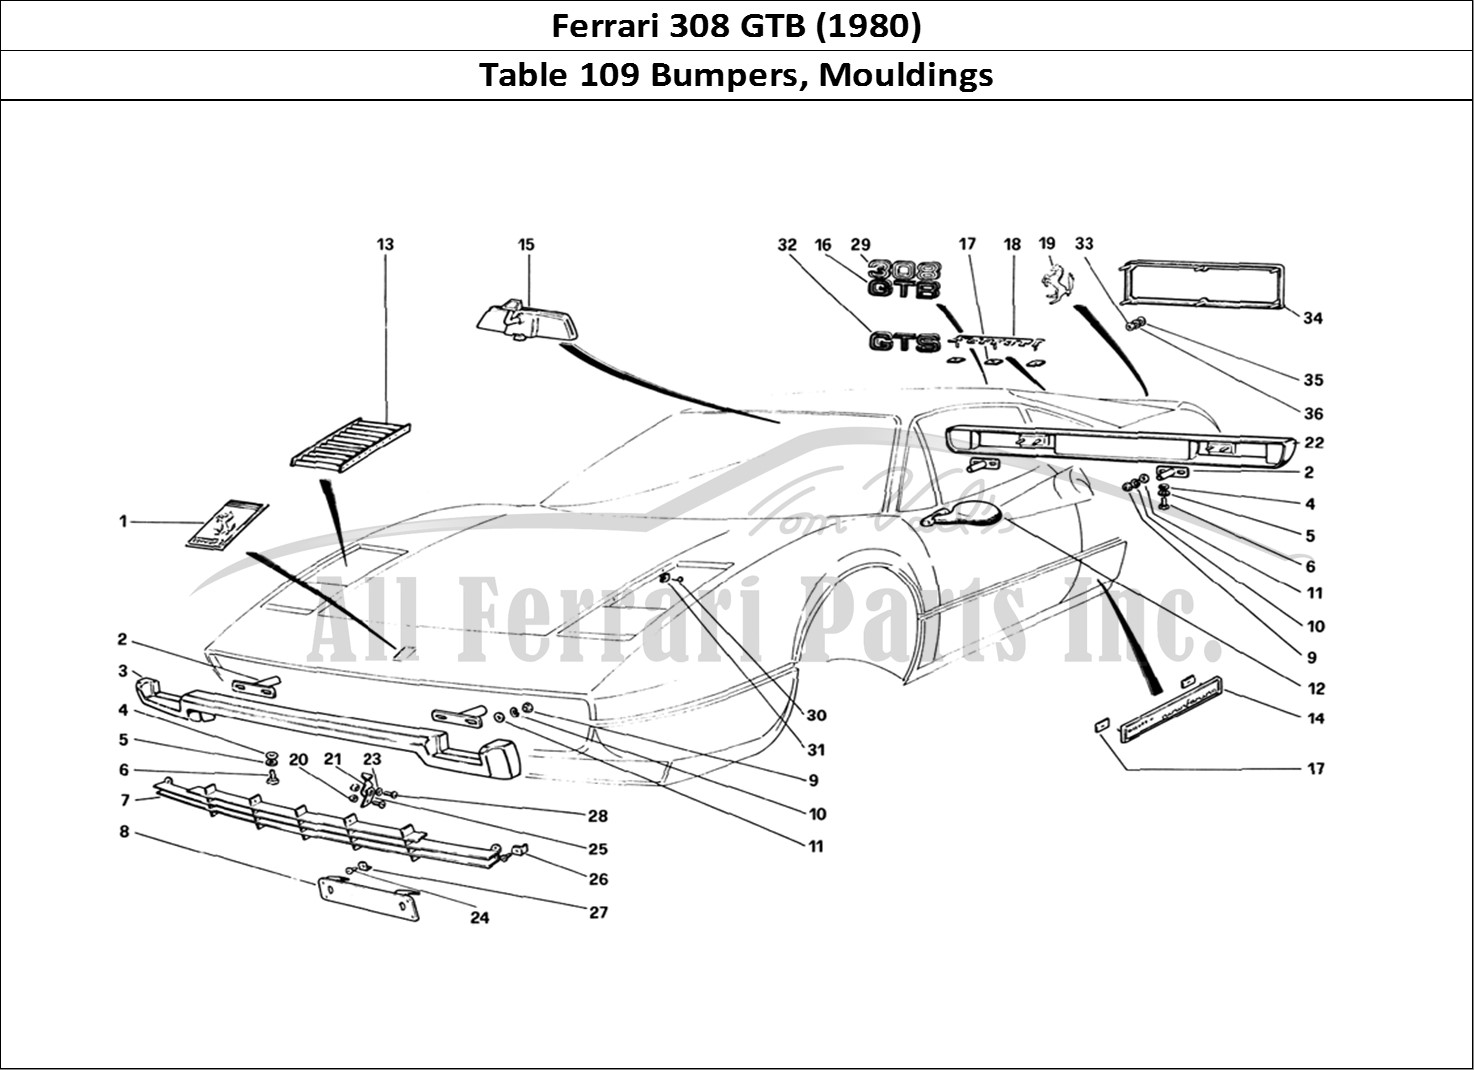 Ferrari Parts Ferrari 308 GTB (1980) Page 109 Bumpers and Mouldings